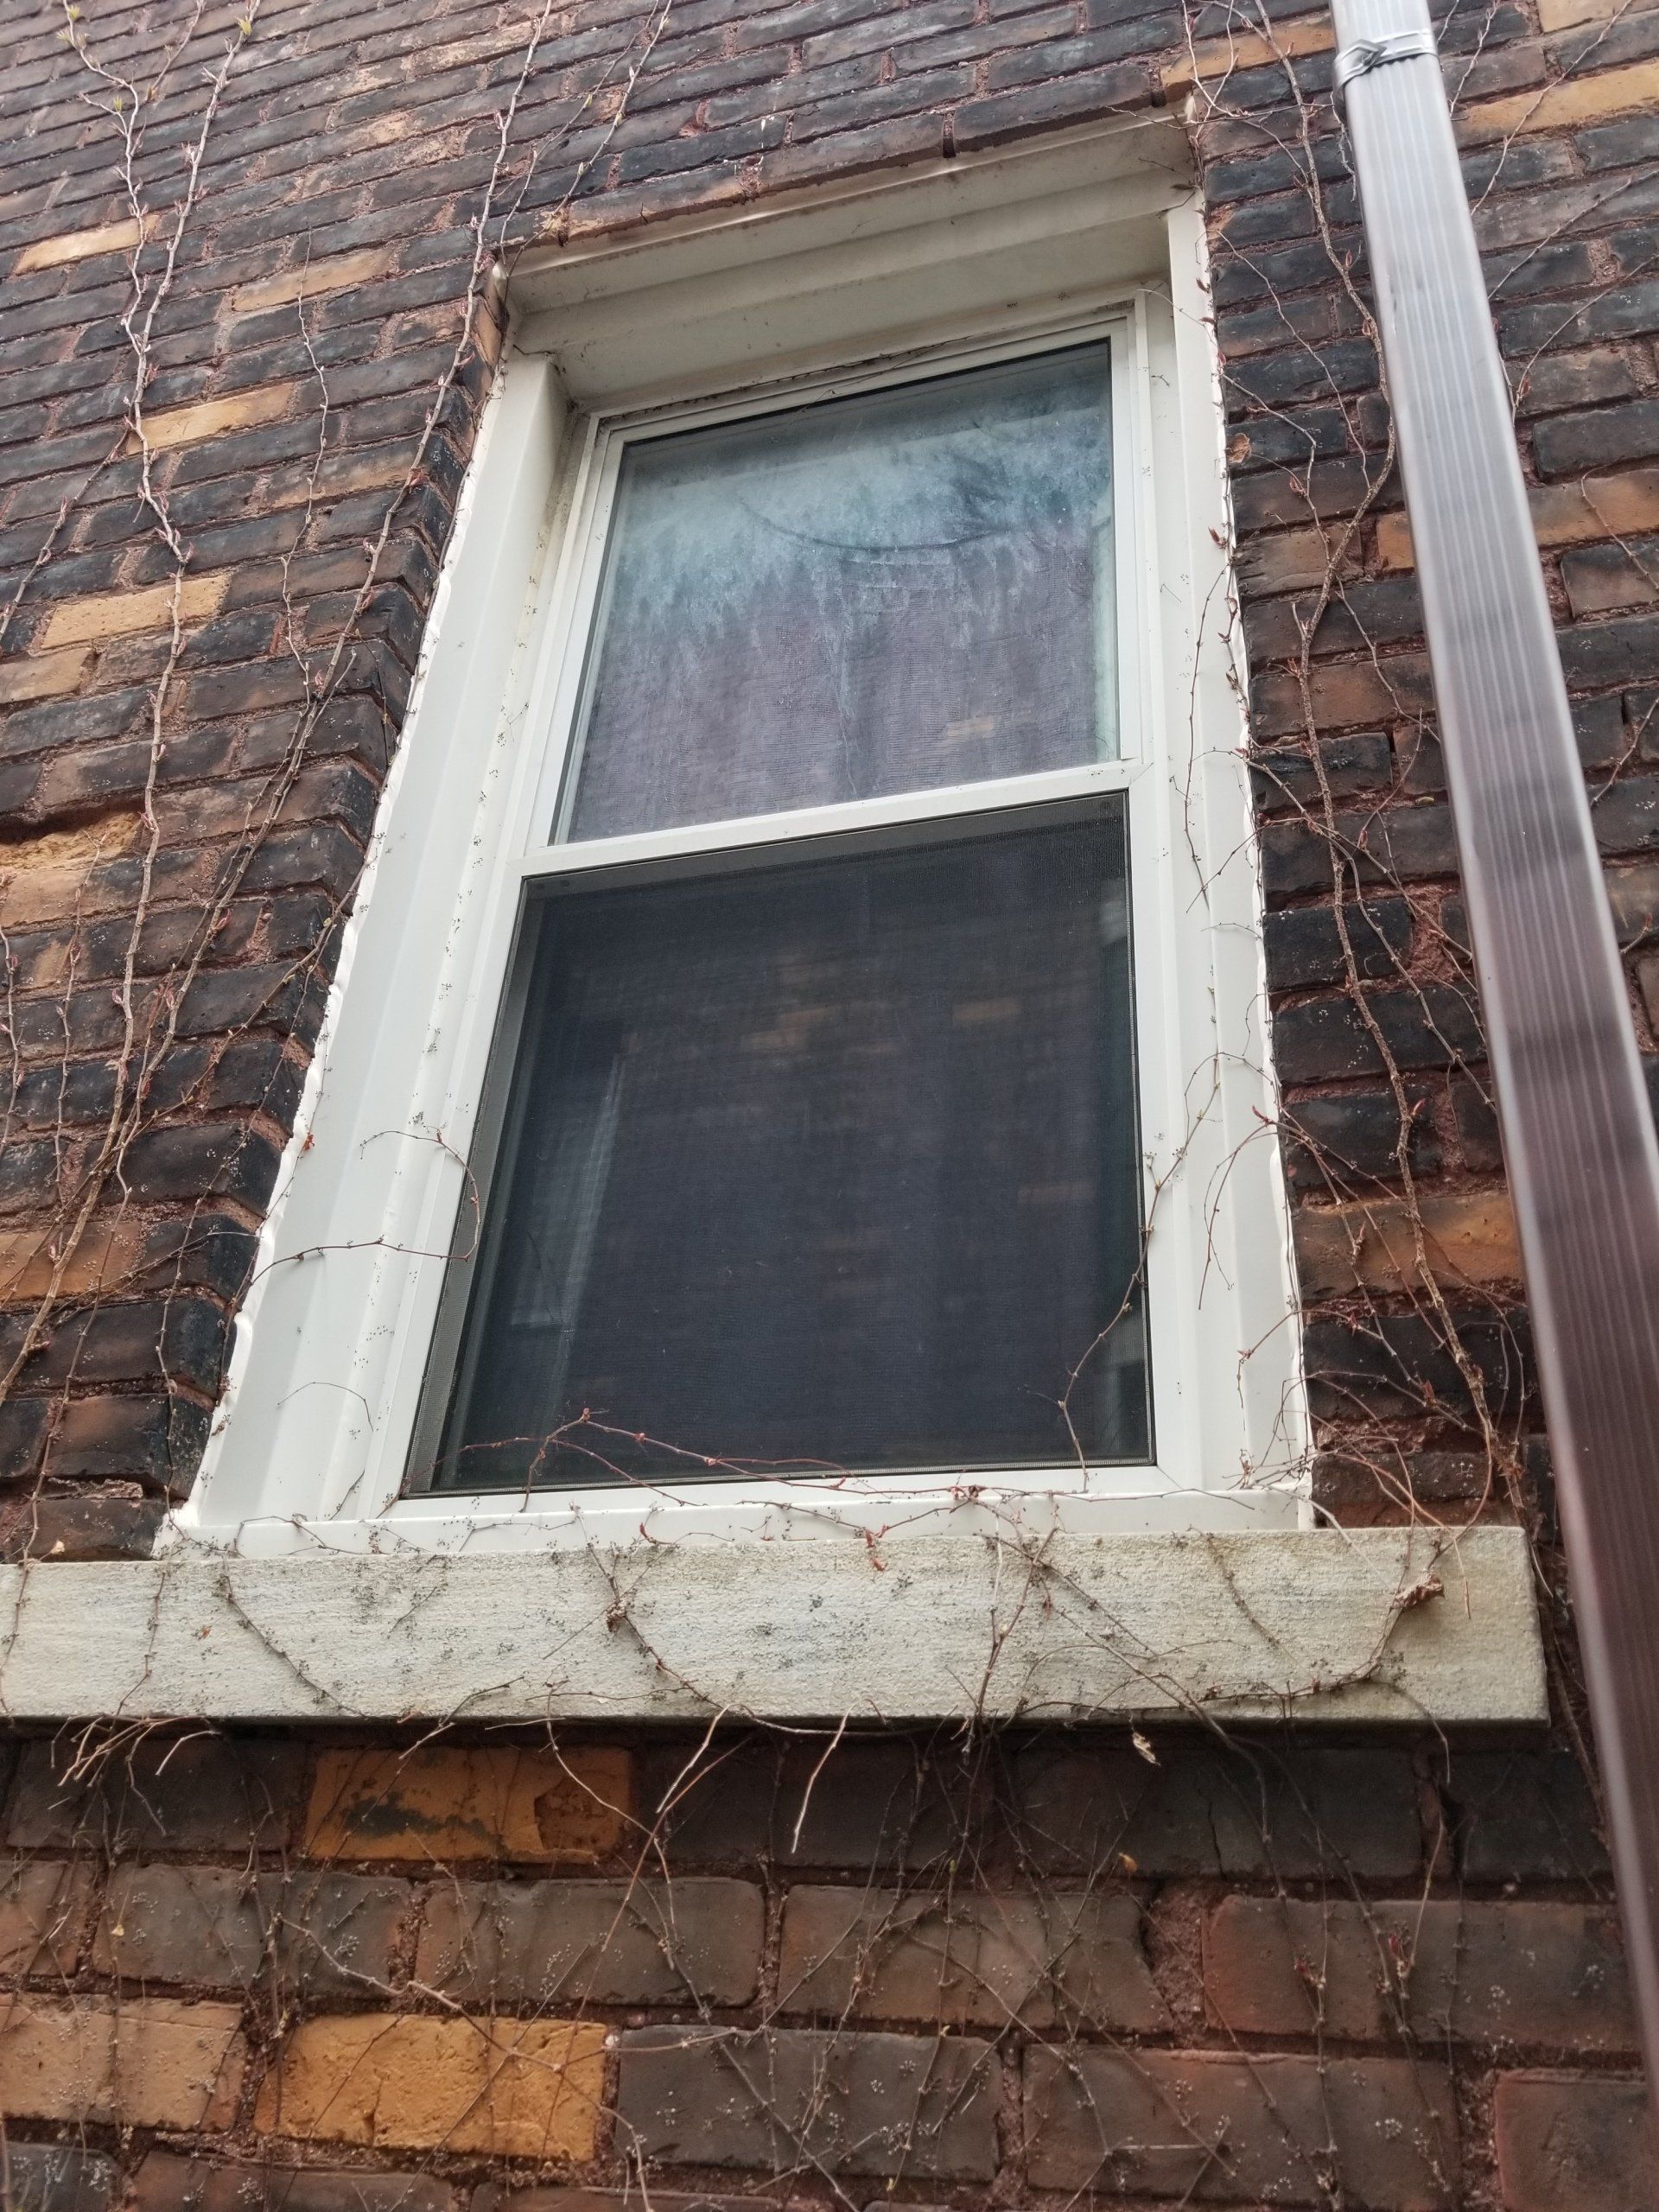 Dirty windows